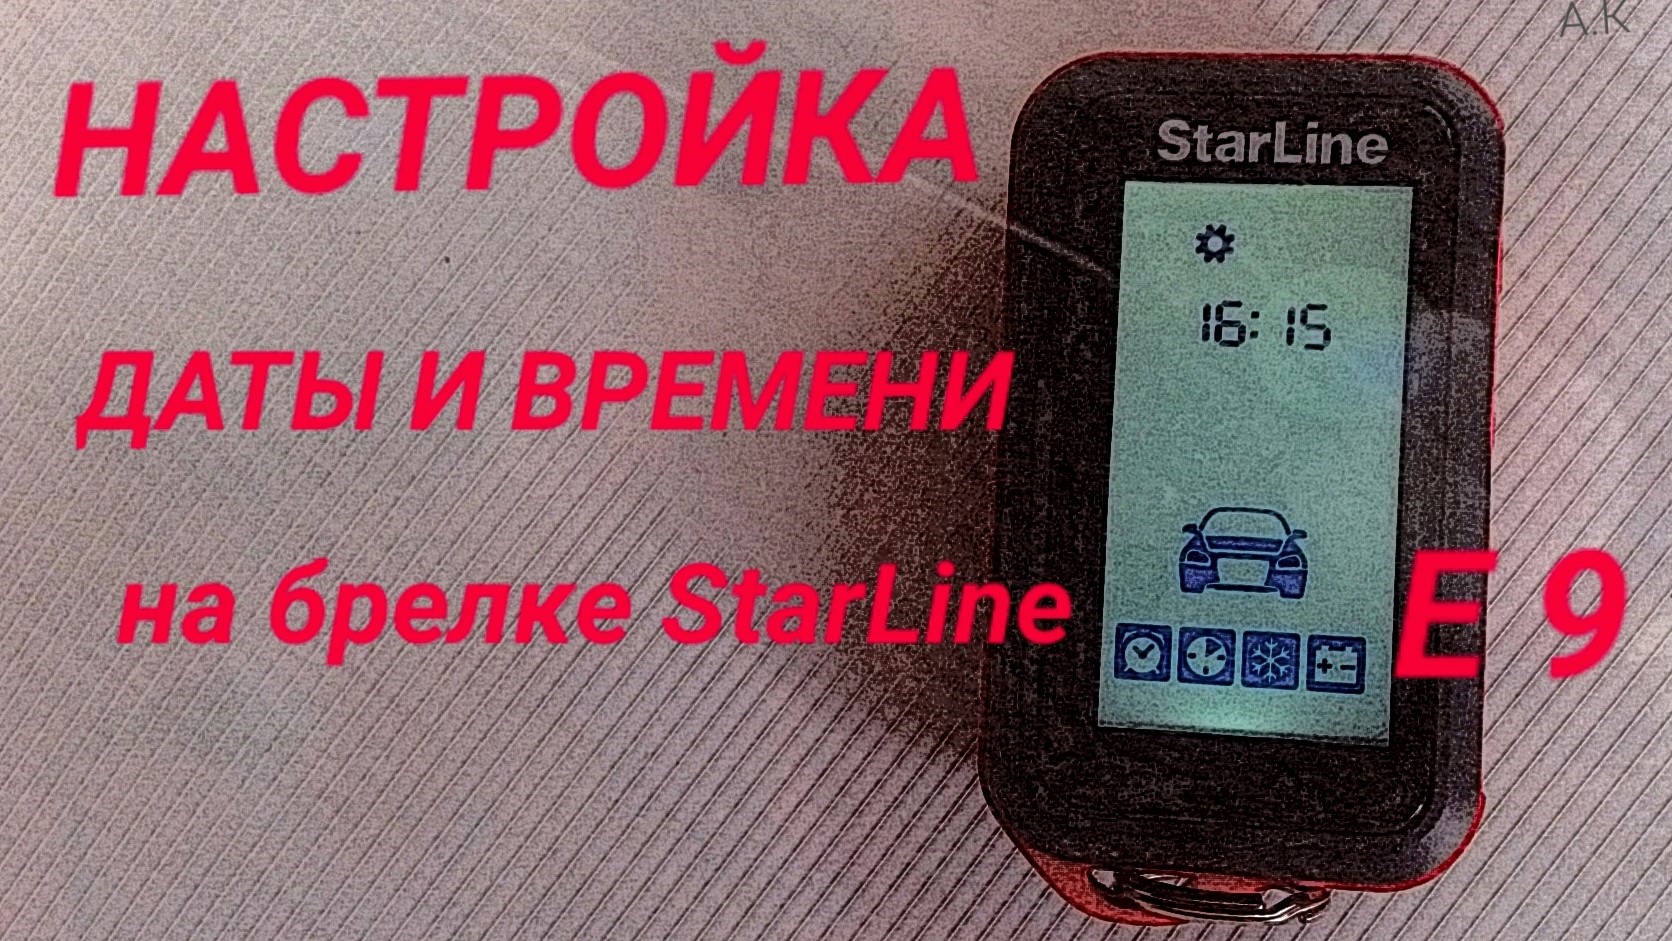 Брелок starline установить время. STARLINE e96 v2 брелок. Брелок сигнализации старлайн е 96. STARLINE a96 v2 брелок. Брелок сигнализации STARLINE е96.